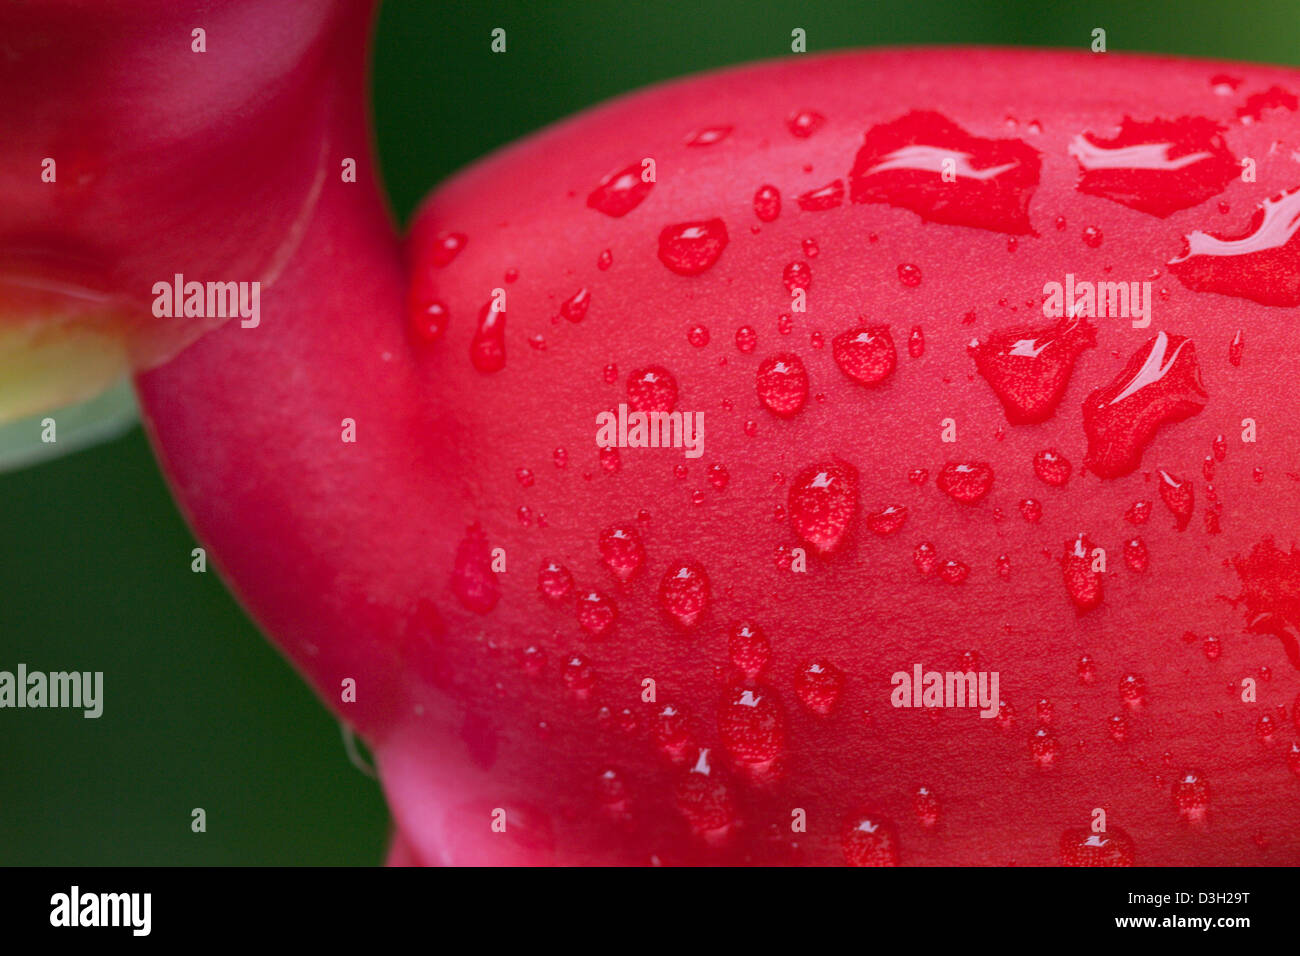 red tropical flower pico de lorro Stock Photo